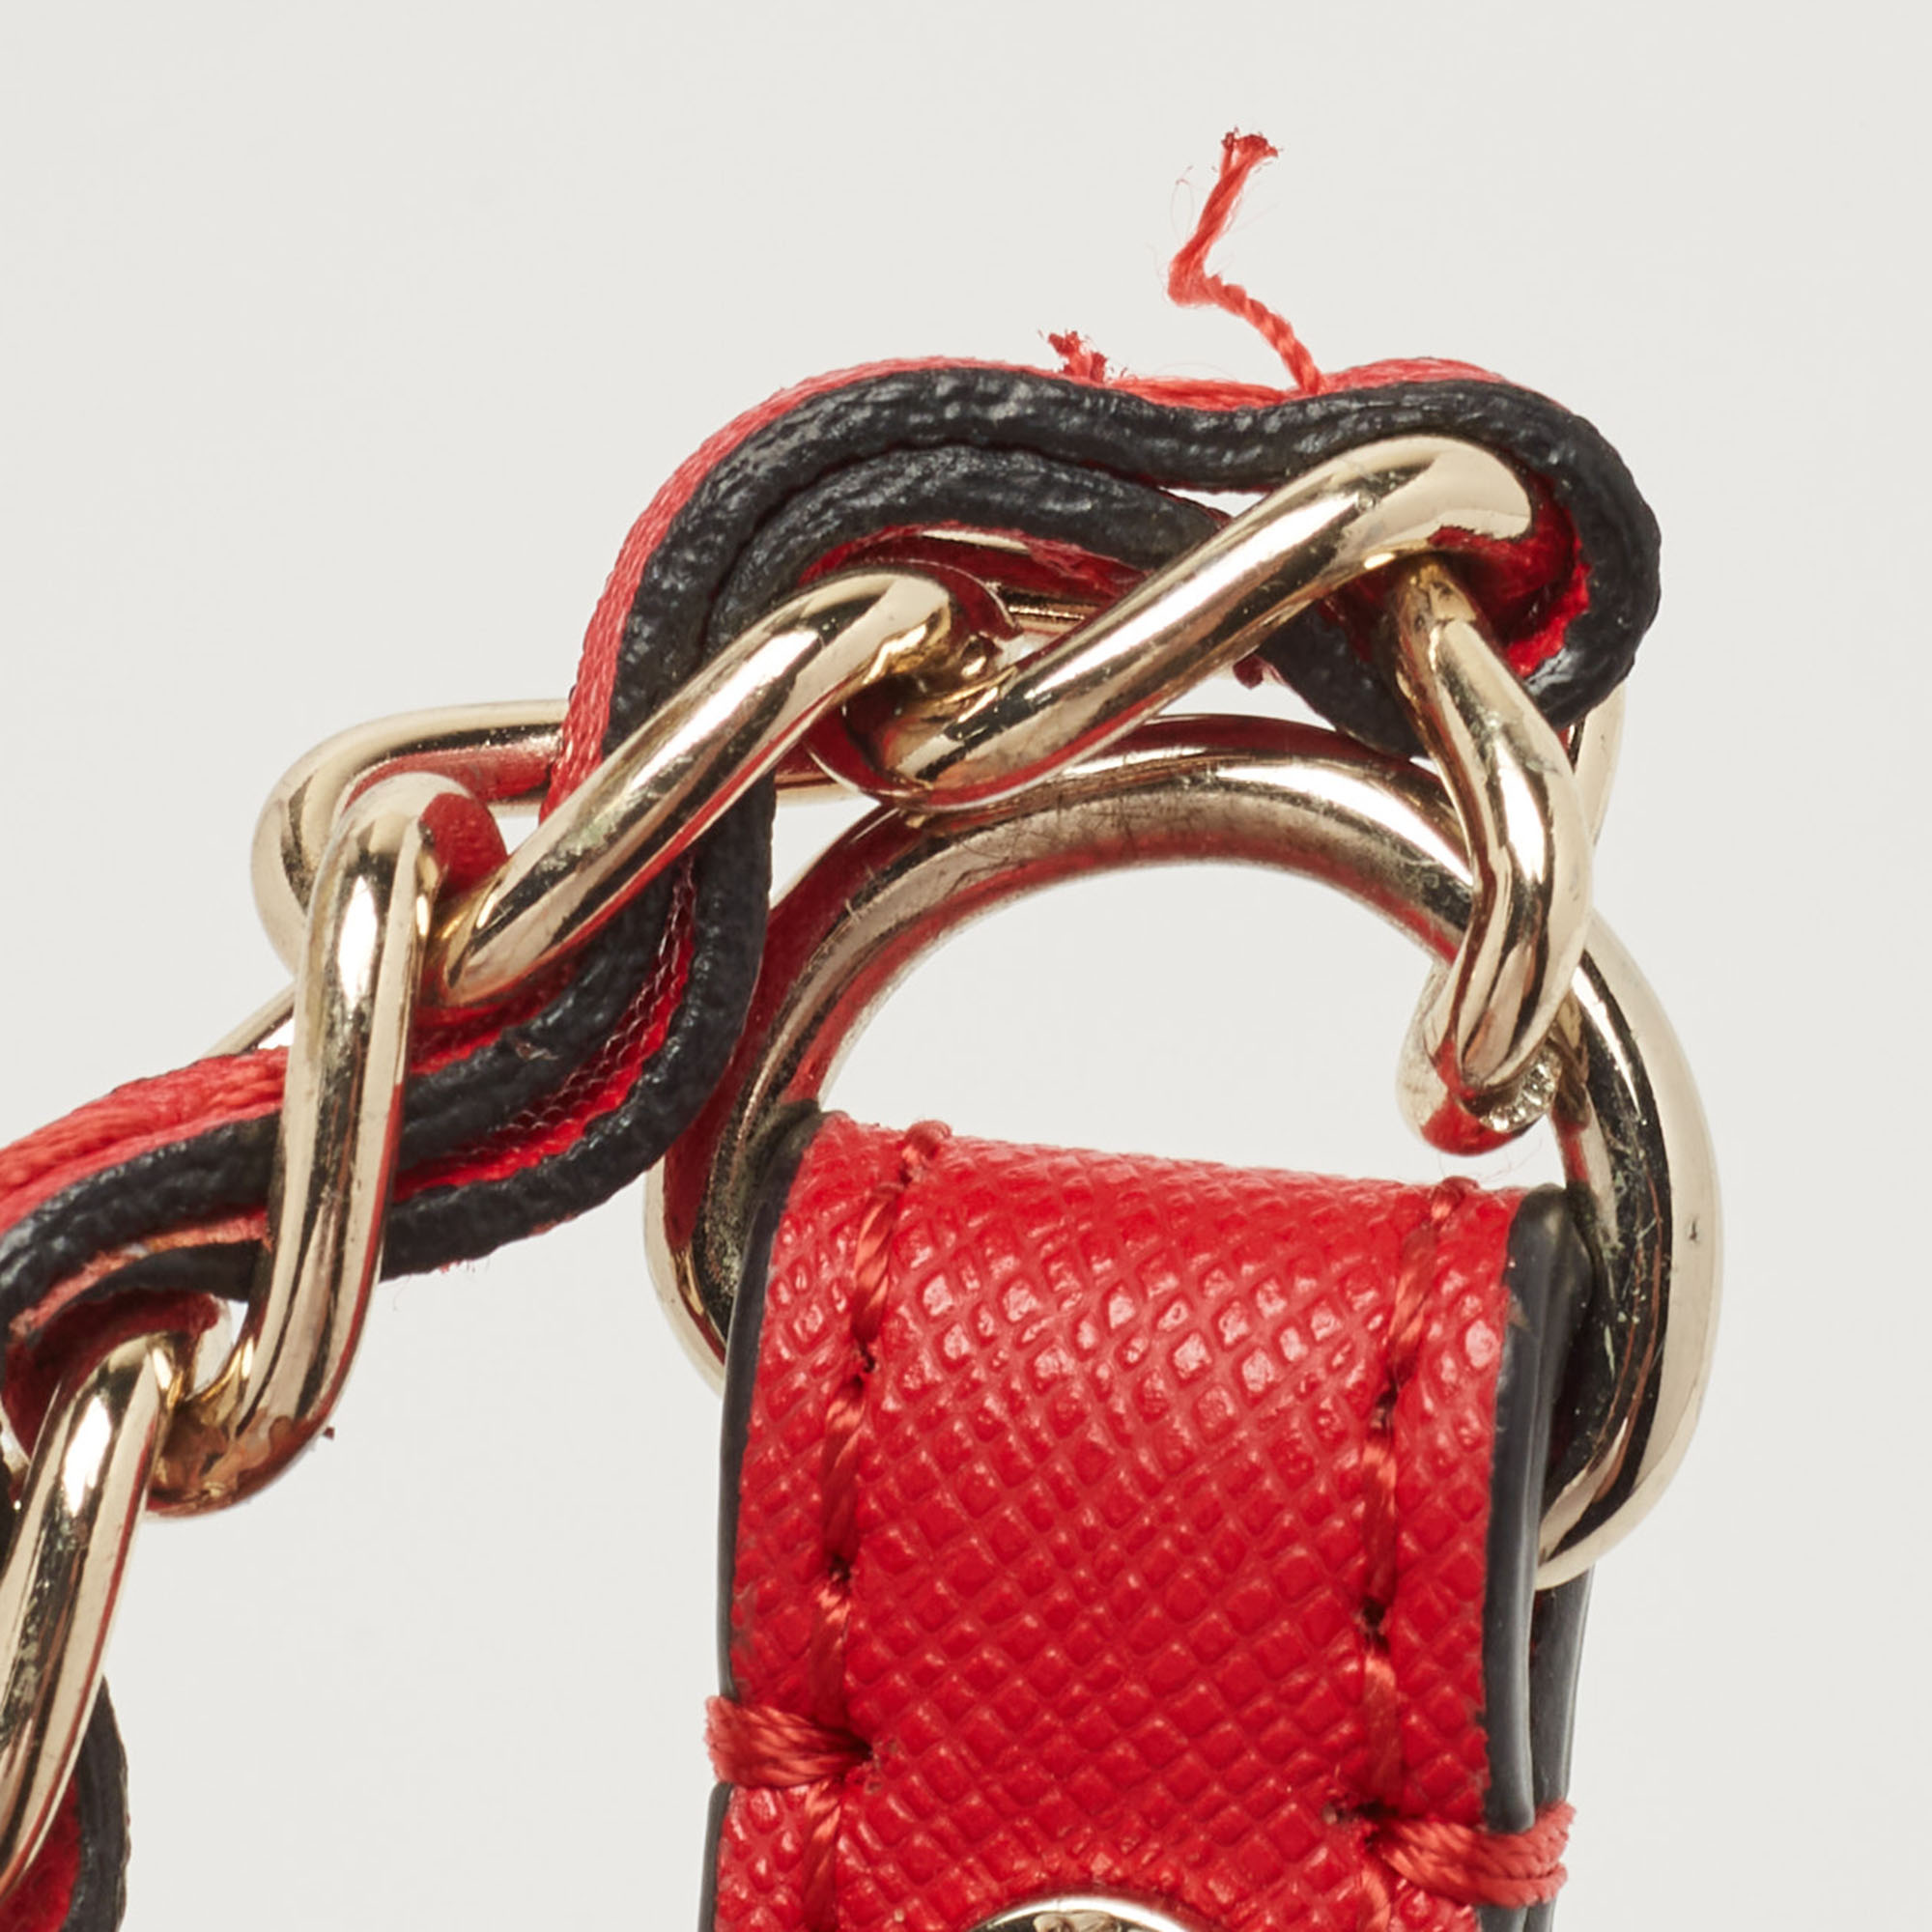 DKNY Red Saffiano Leather Bryant Park Shoulder Bag